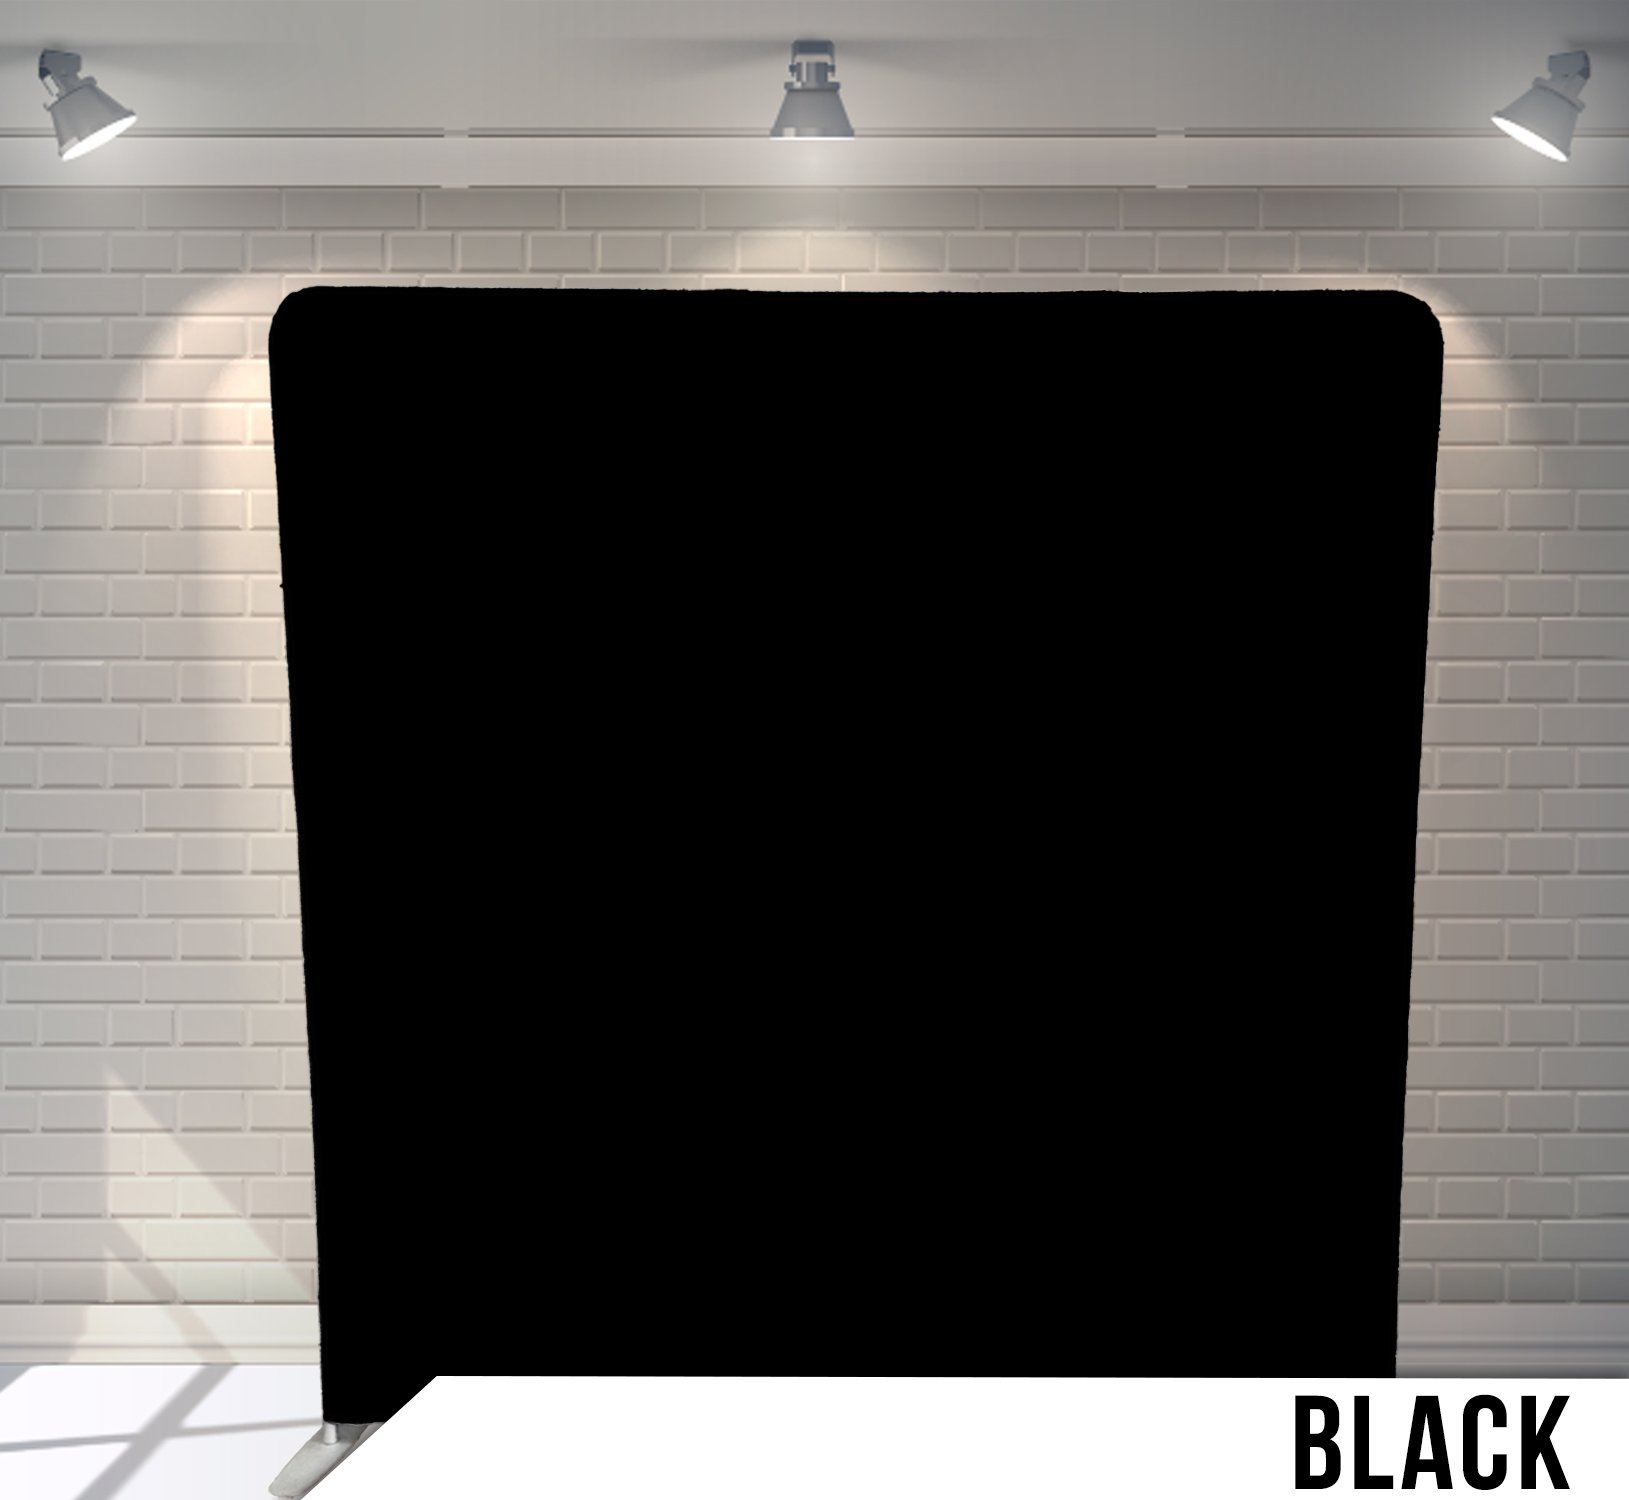 Black (1).jpg